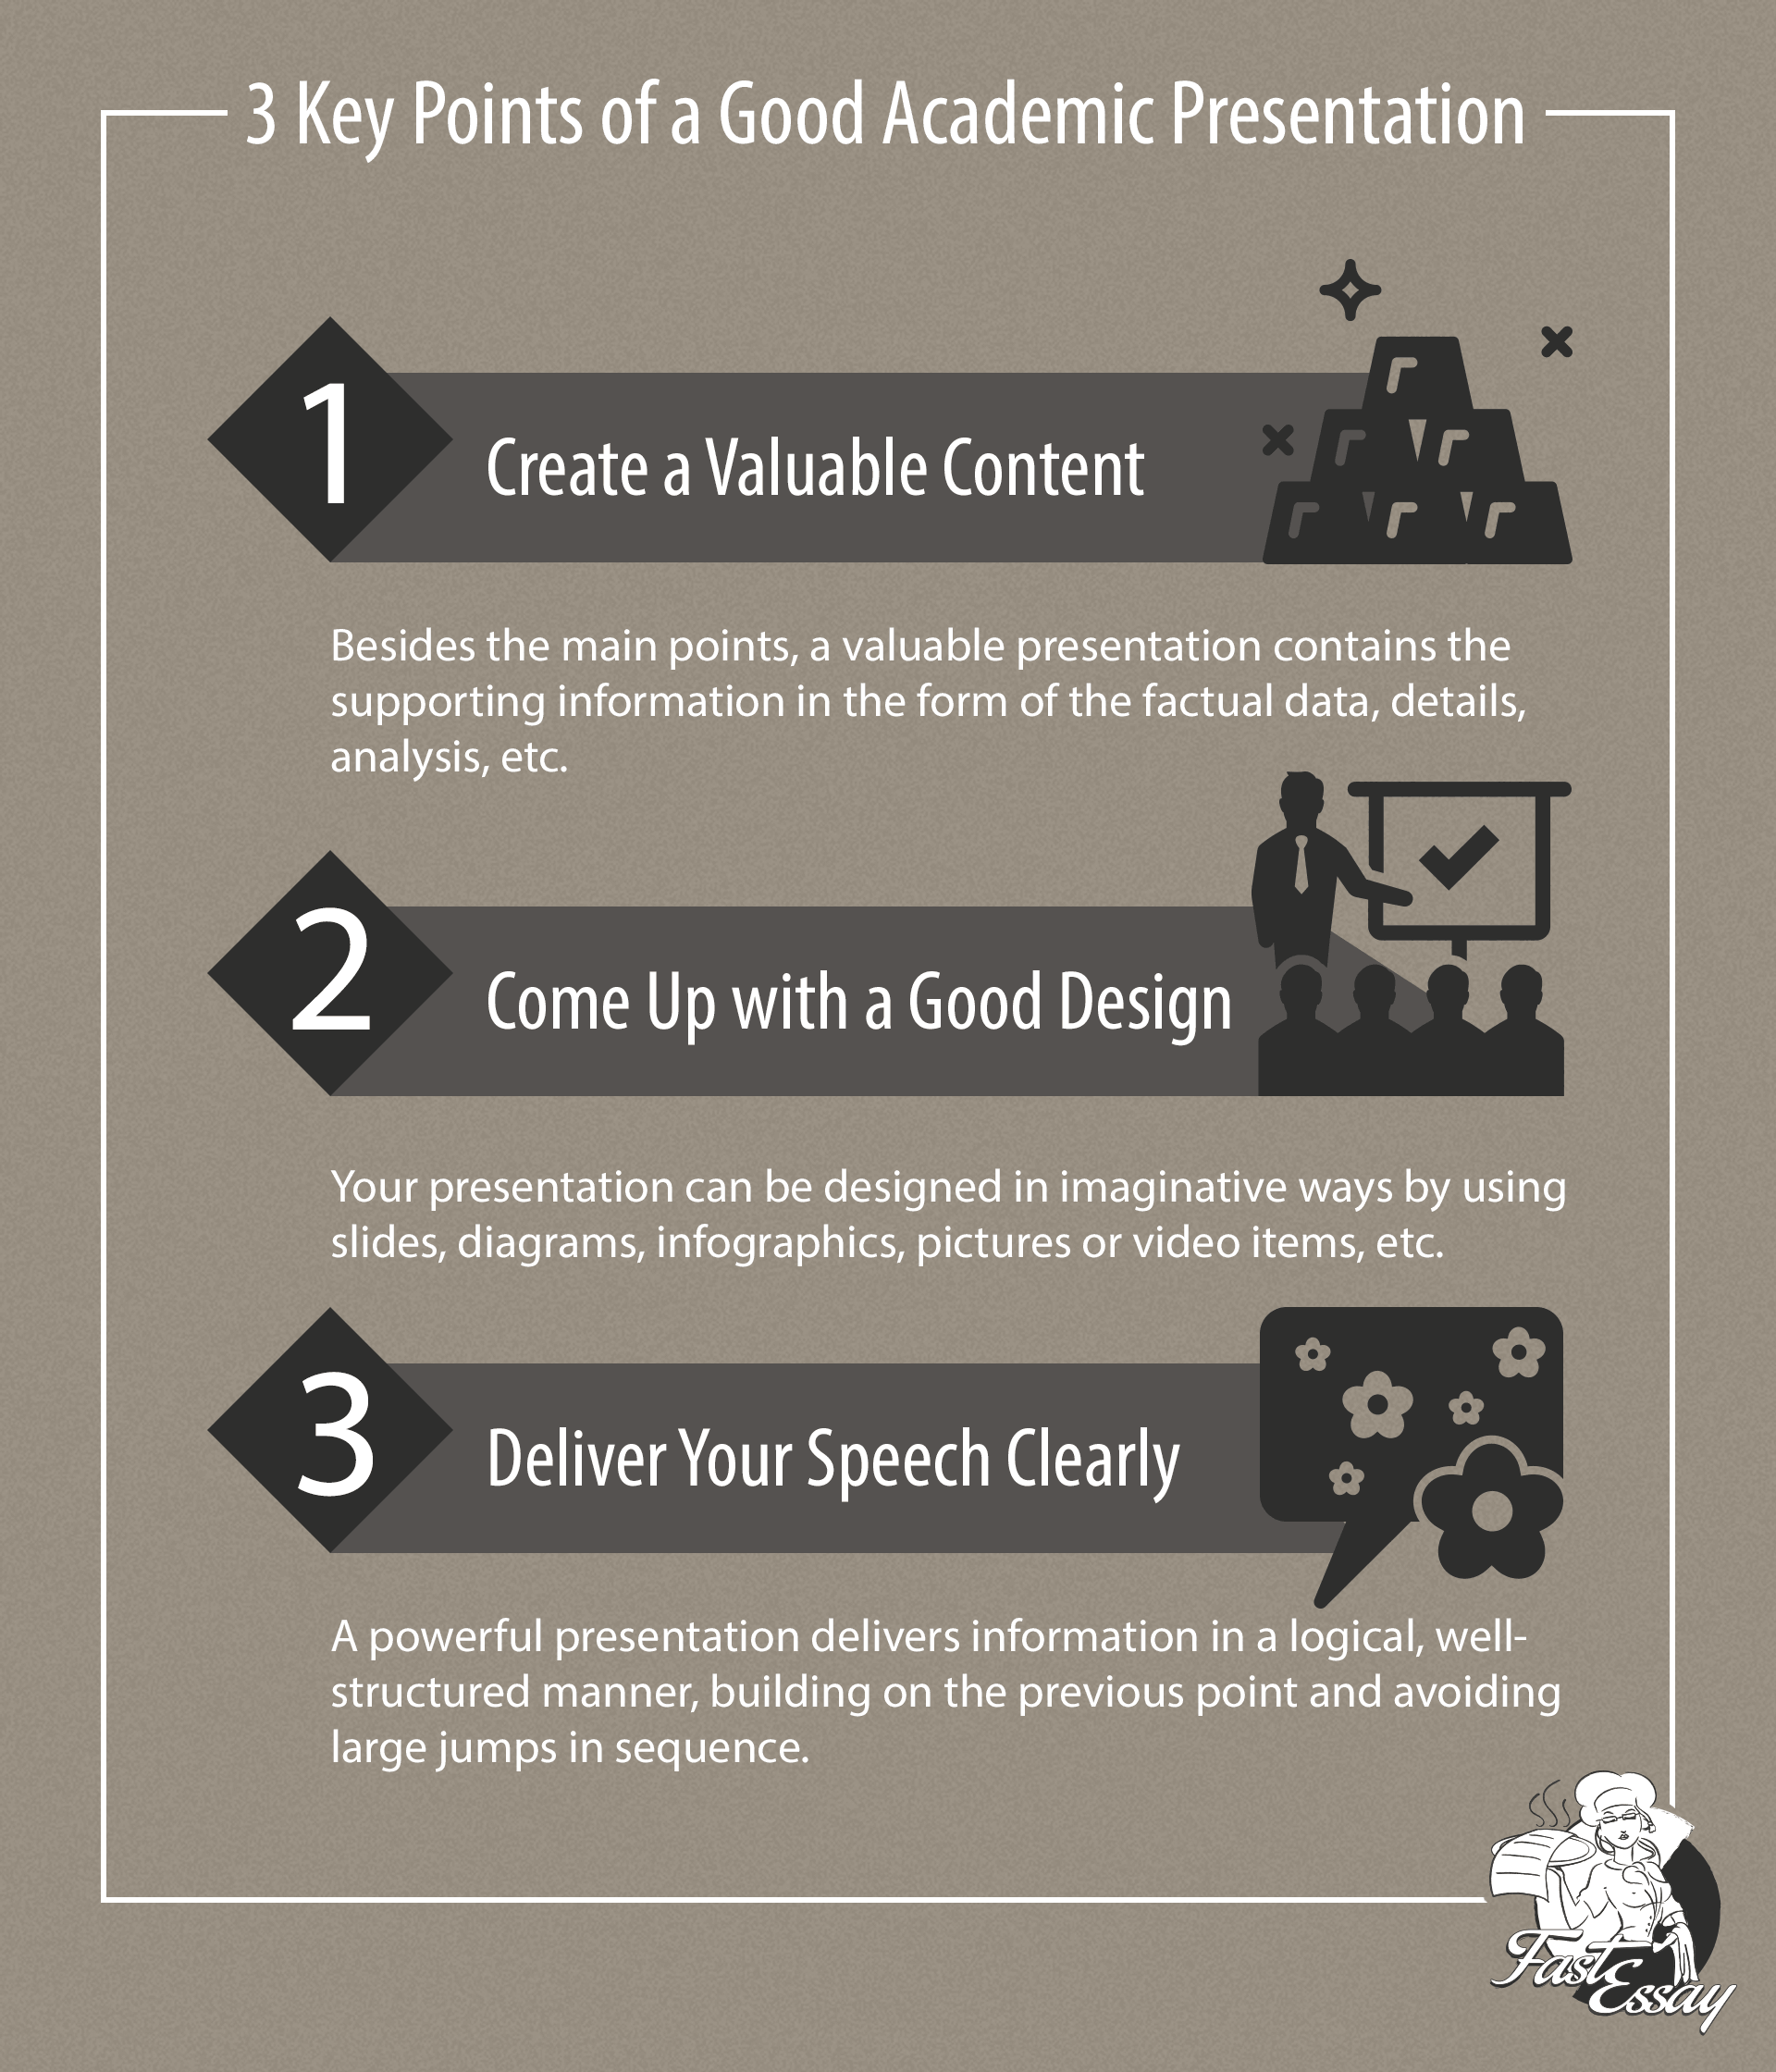 3 Key Points of a Good Academic Presentation